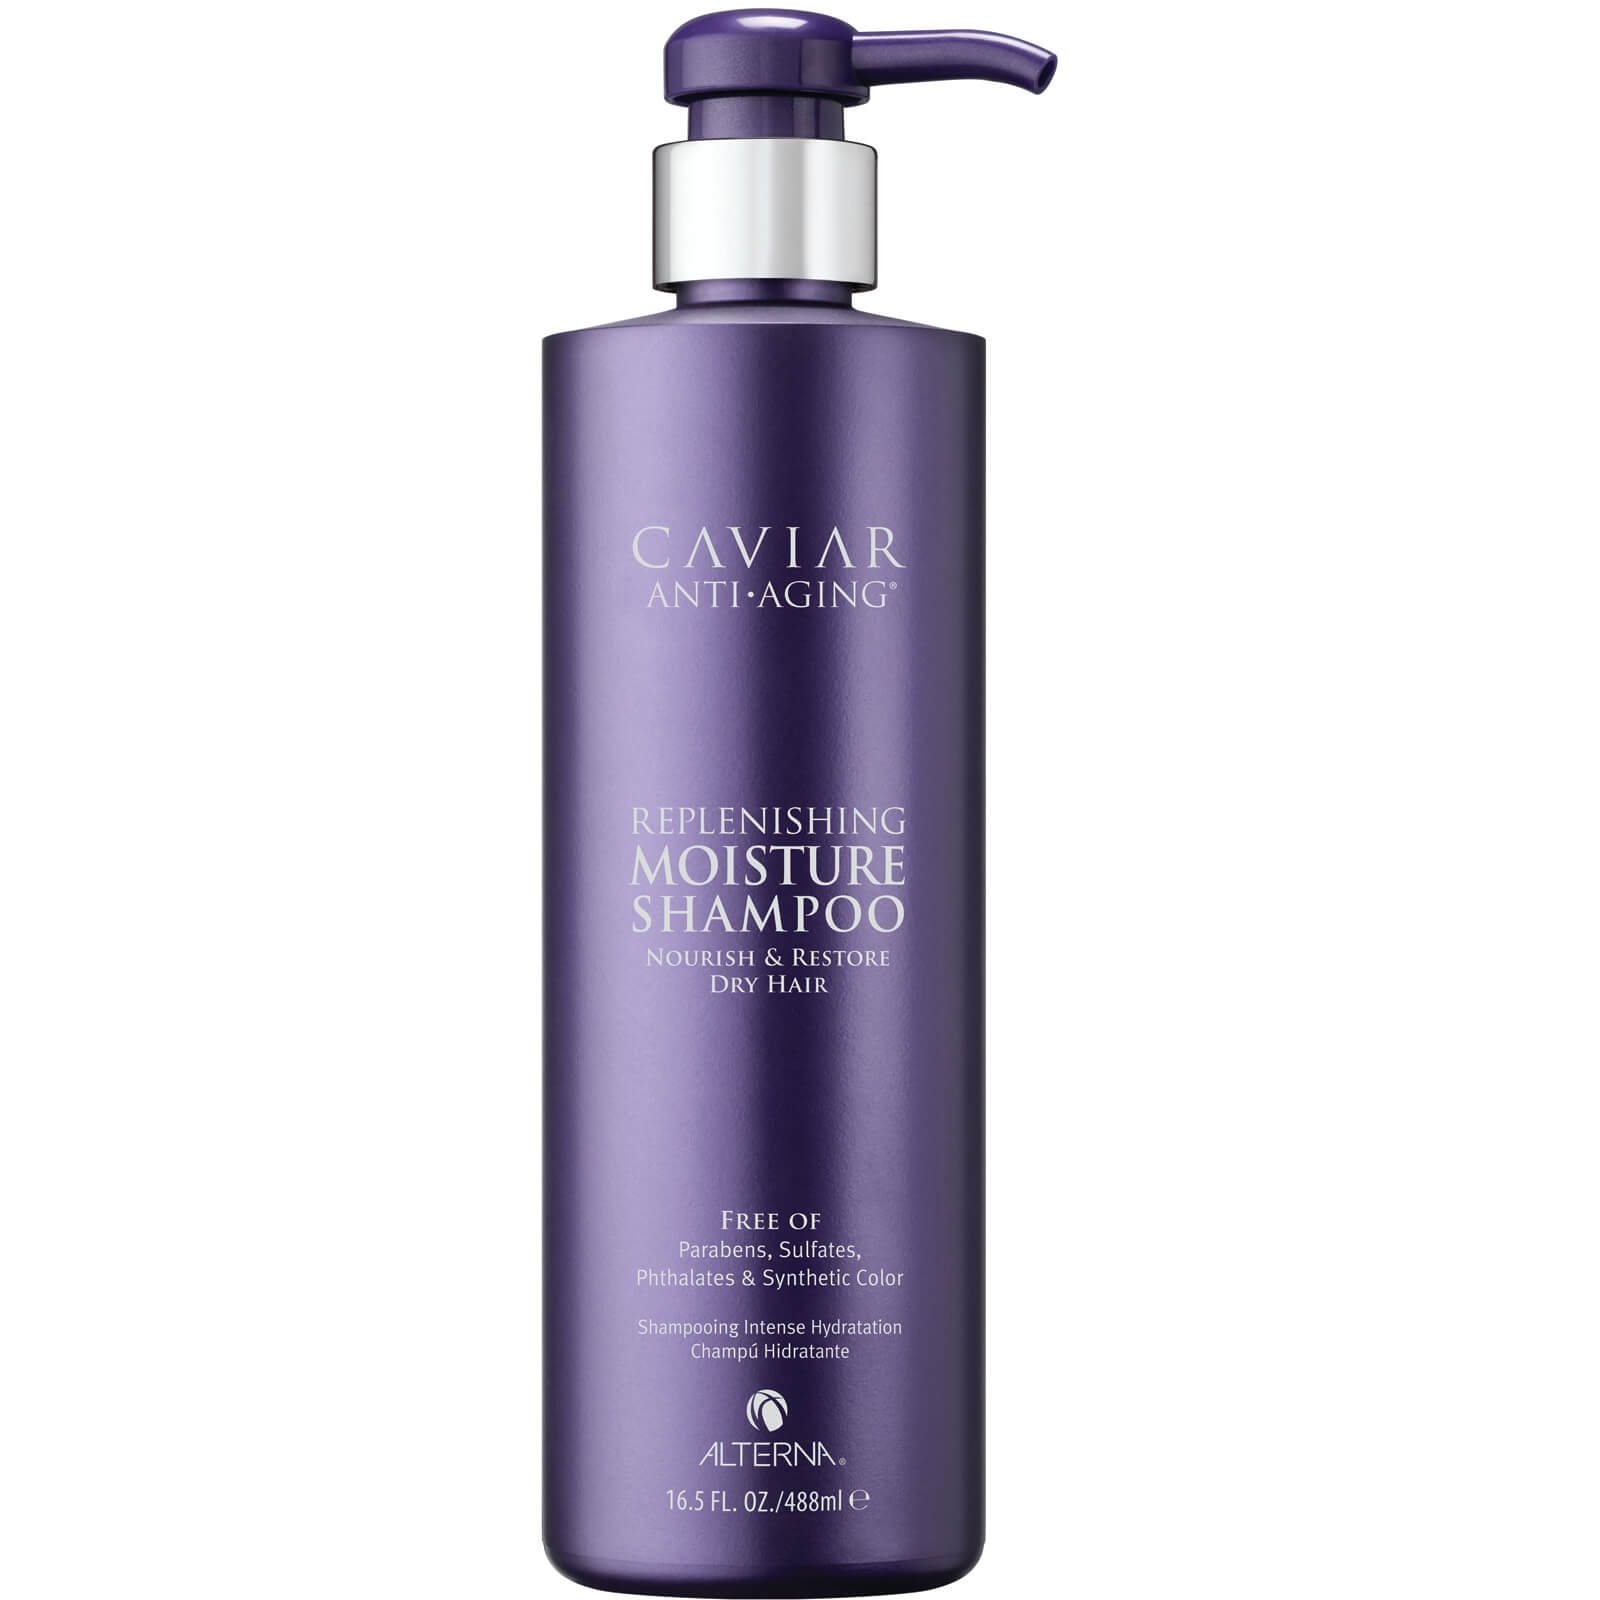 Alterna Caviar Anti-Aging Replenishing Moisture Shampoo 16.5oz (Worth $66)
					
					| SkinCareRX